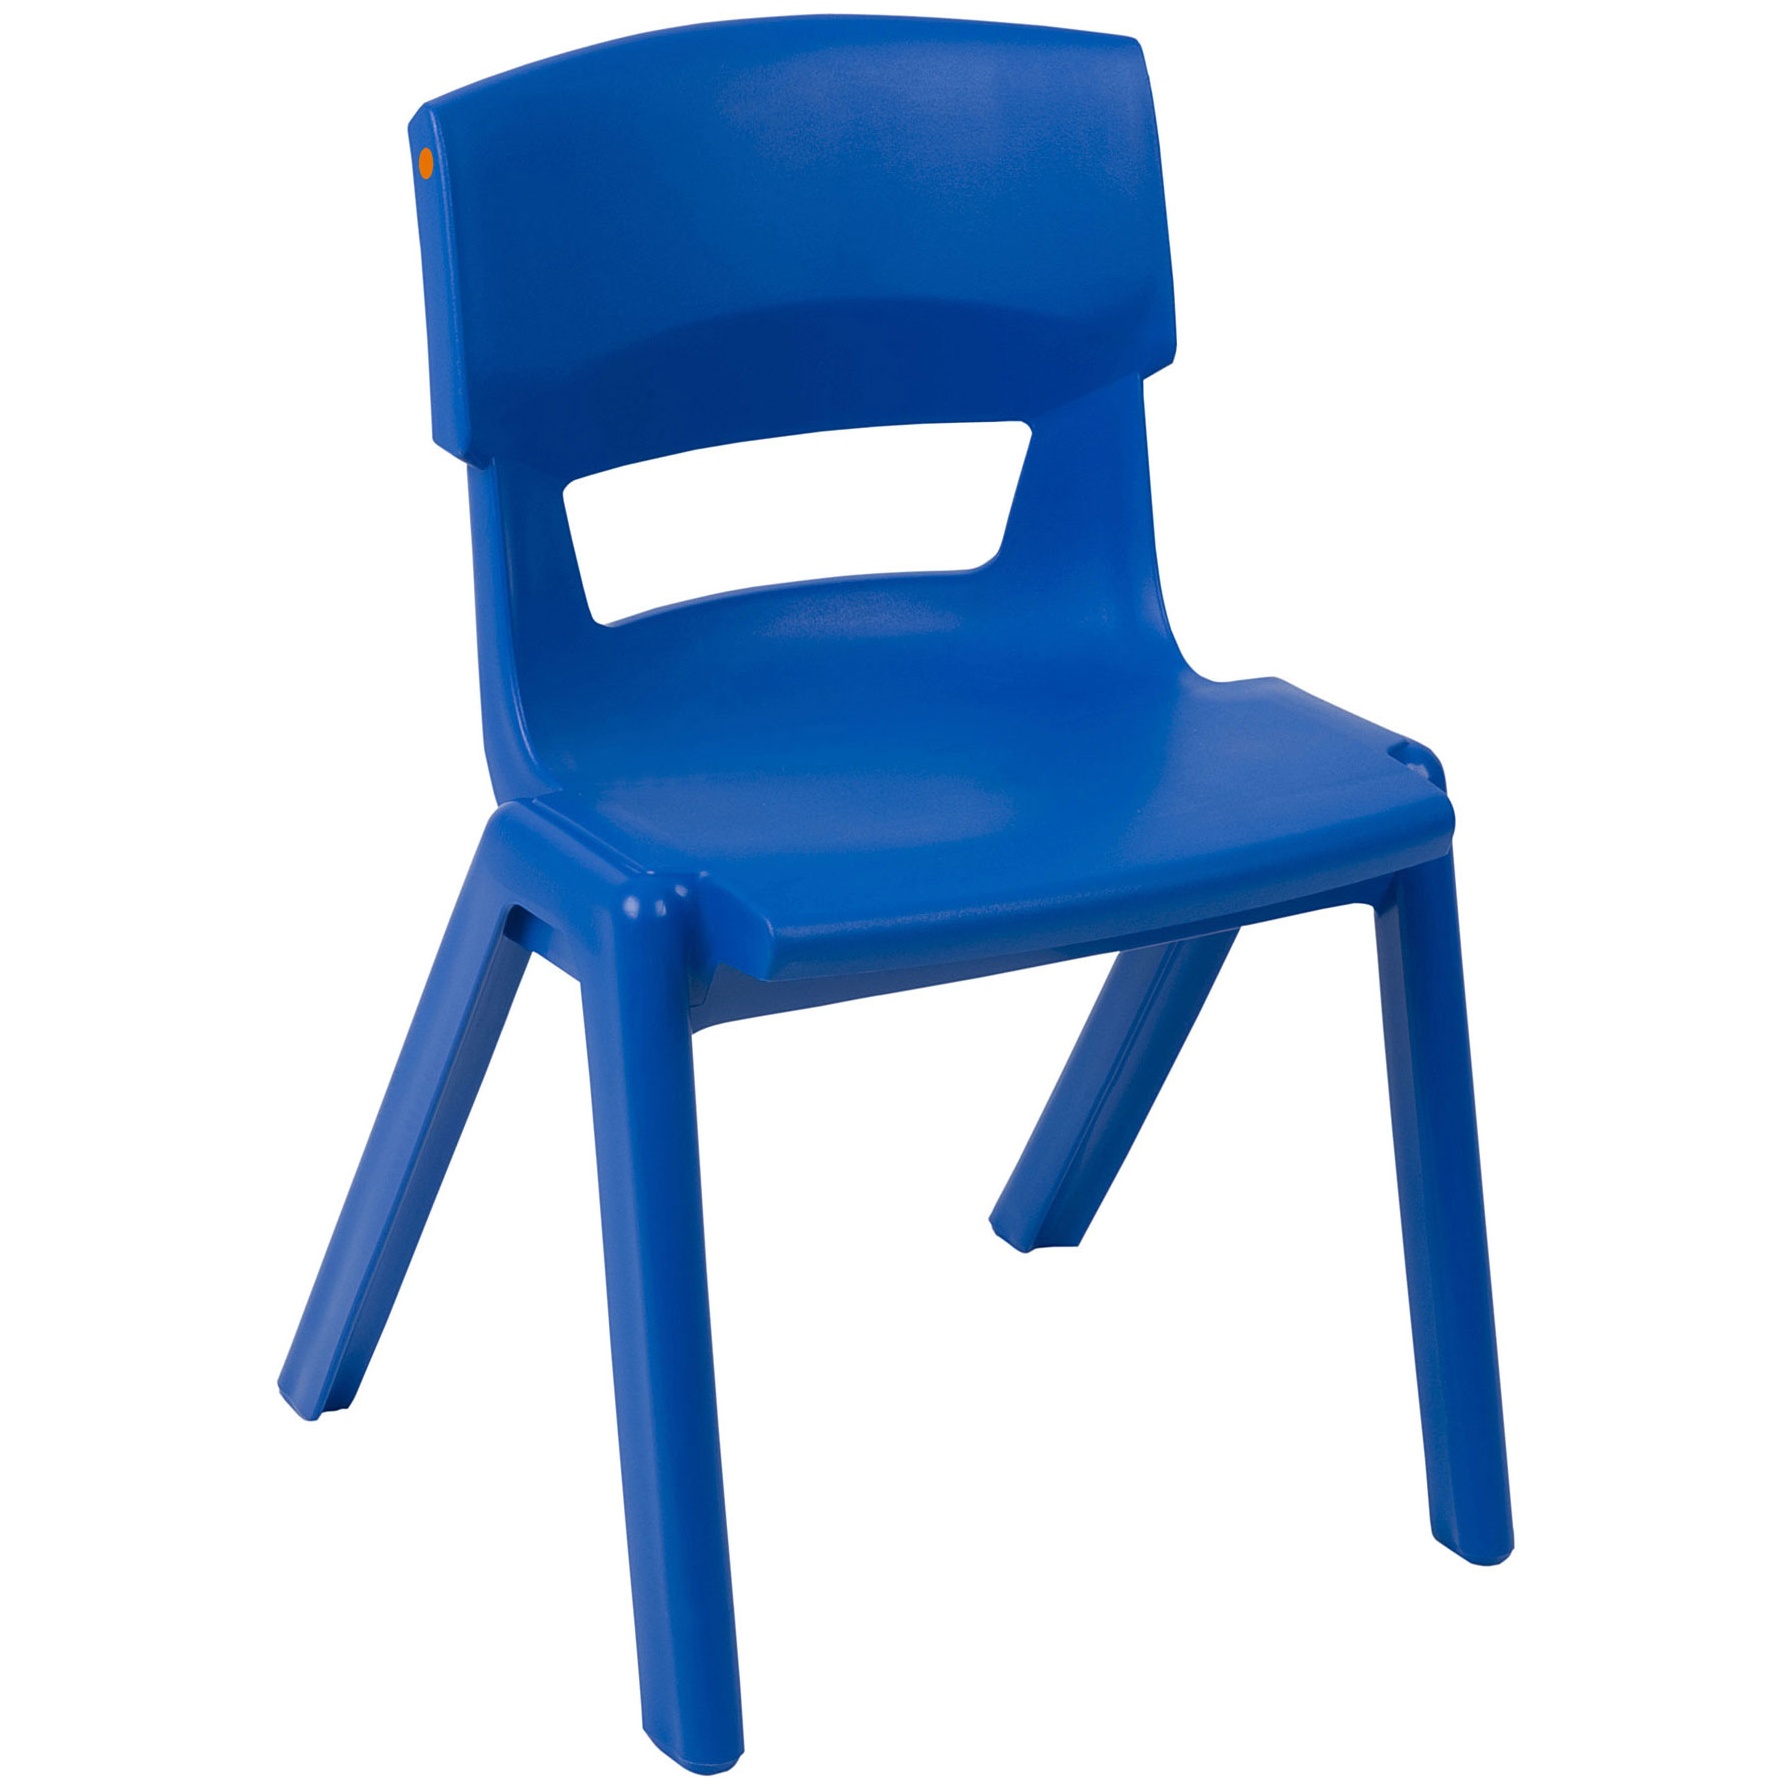 Sebel Postura Plus Classroom Chairs - Bulk Buy Offer | Classroom Chairs